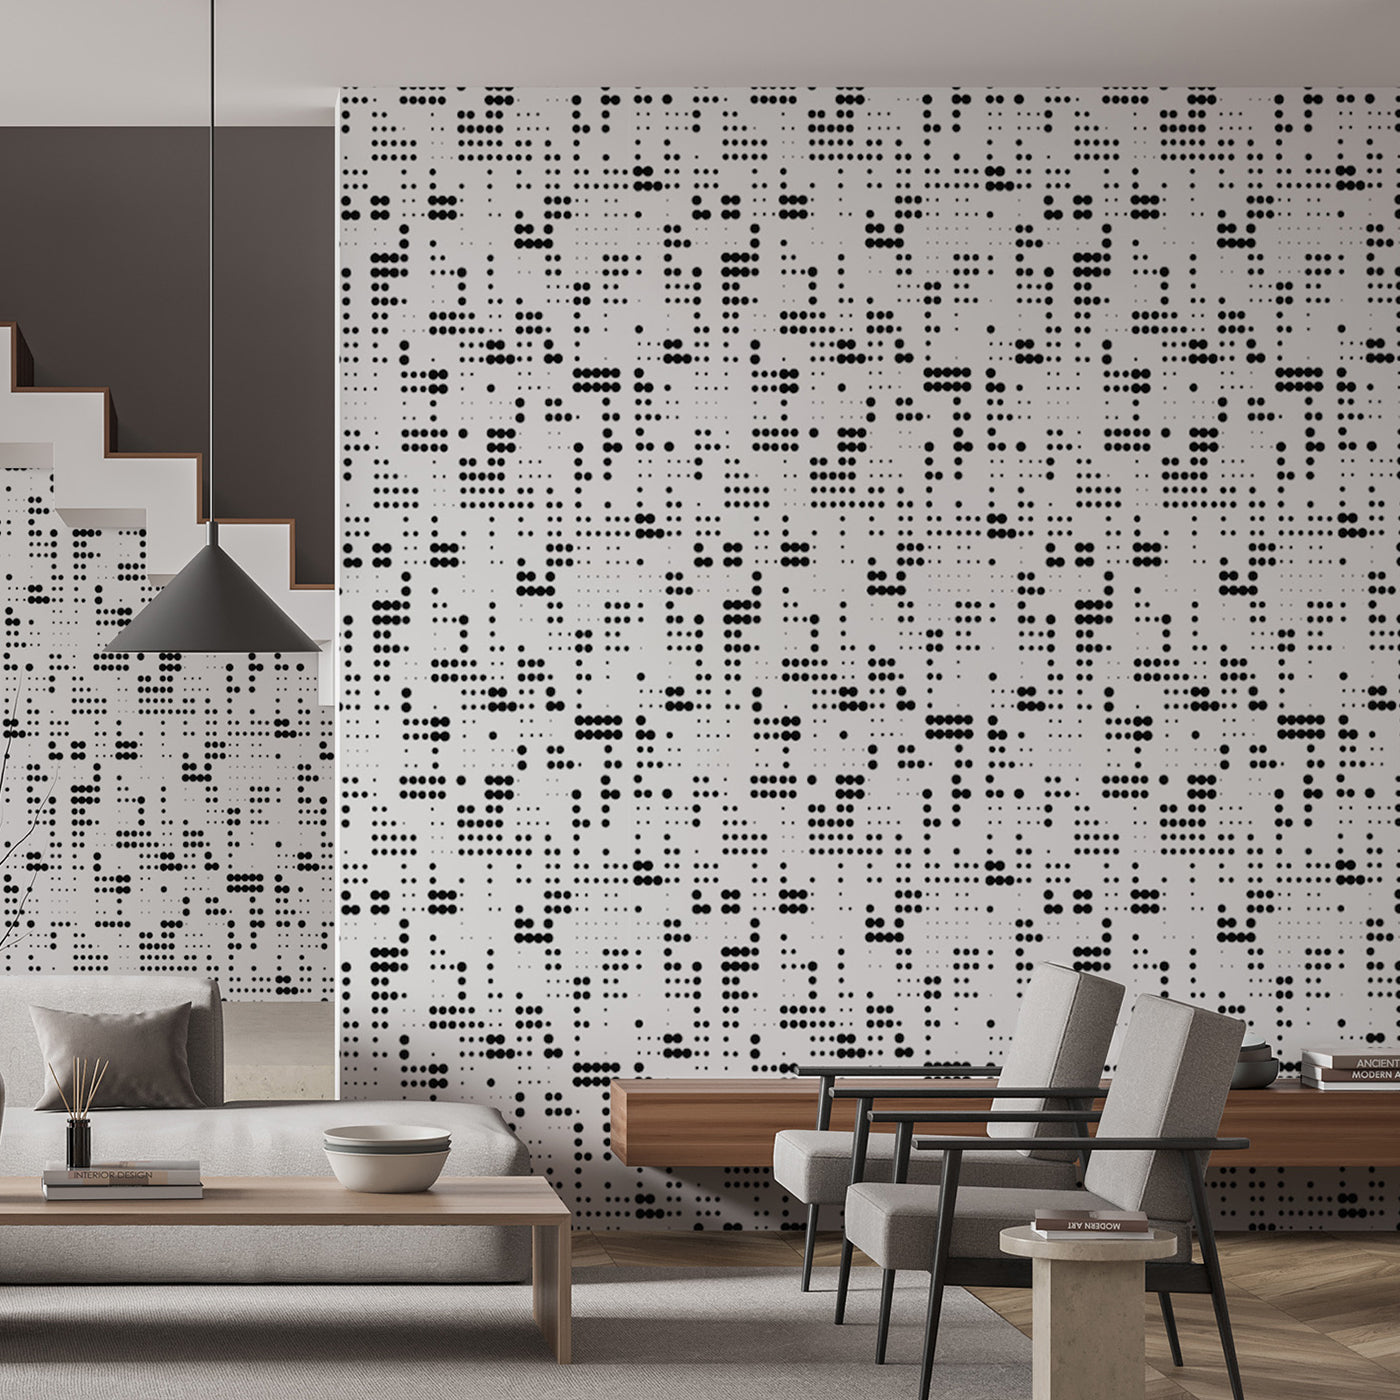 Bhaus100 Black & White Wallpaper - Alternative view 1